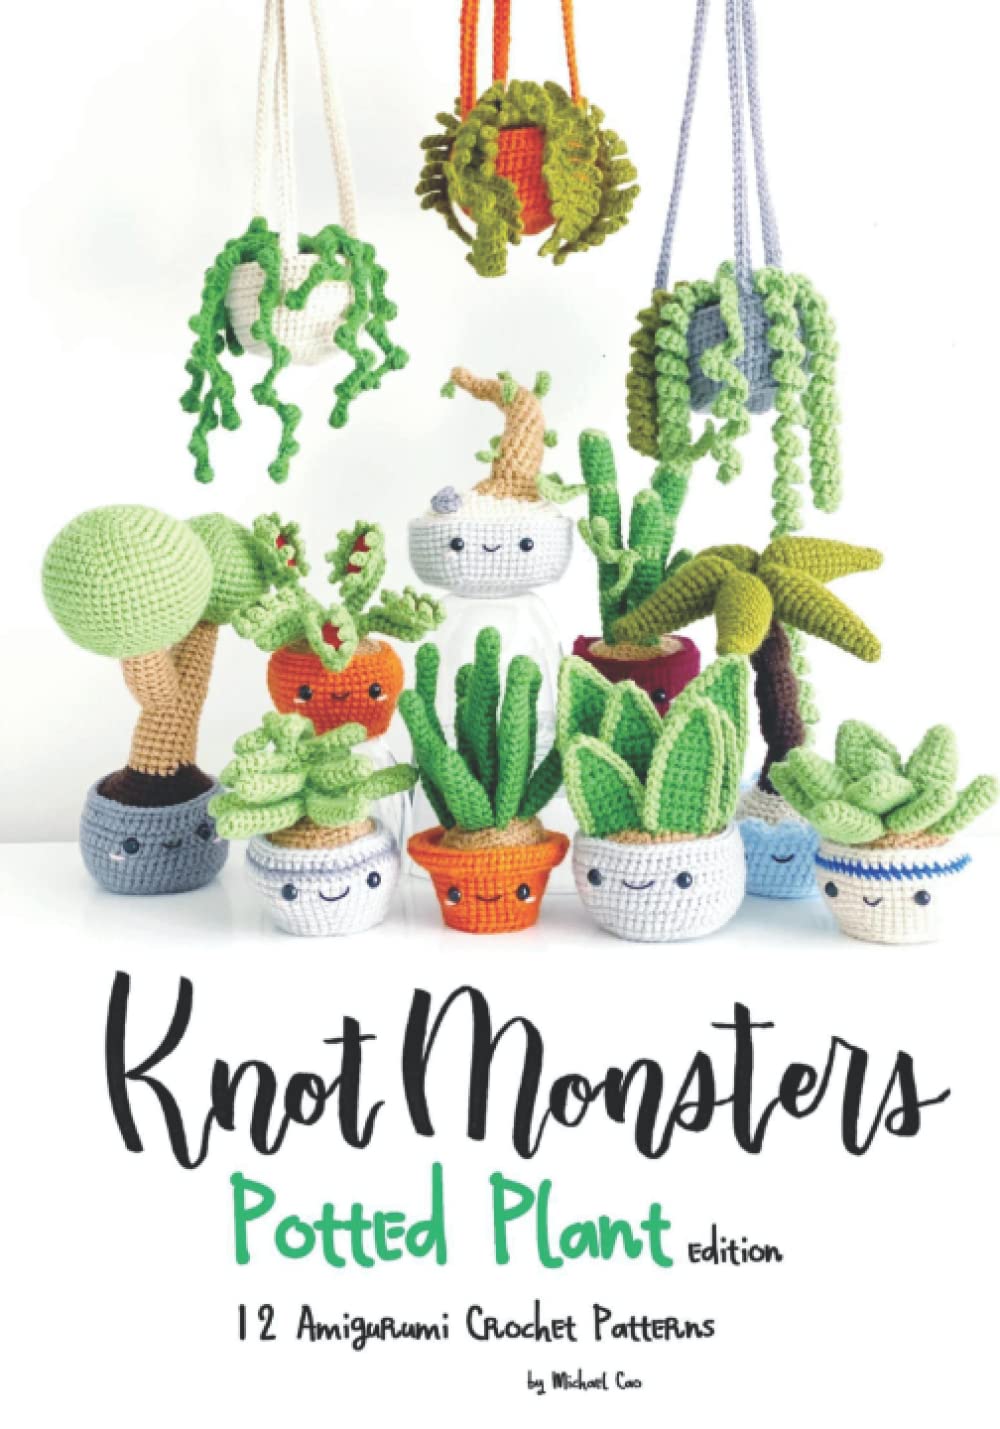 Book Knotmonsters: Potted Plants edition: 12 Amigurumi Crochet Patterns Sushi Aquino